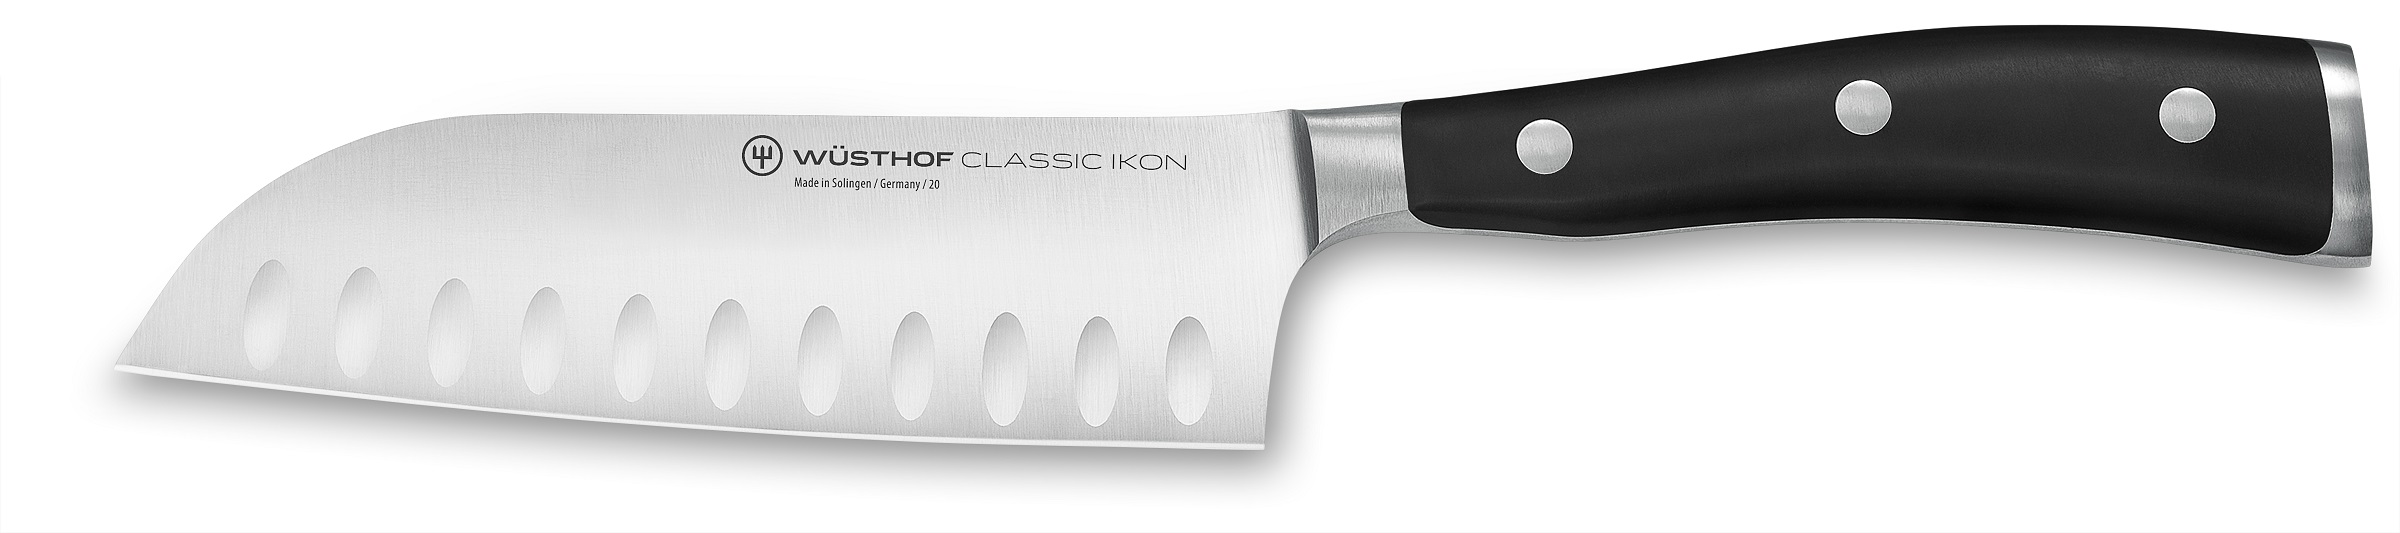 Wusthof Ikon Forged Stainless Kitchen Shears - KnifeCenter - 1049595301